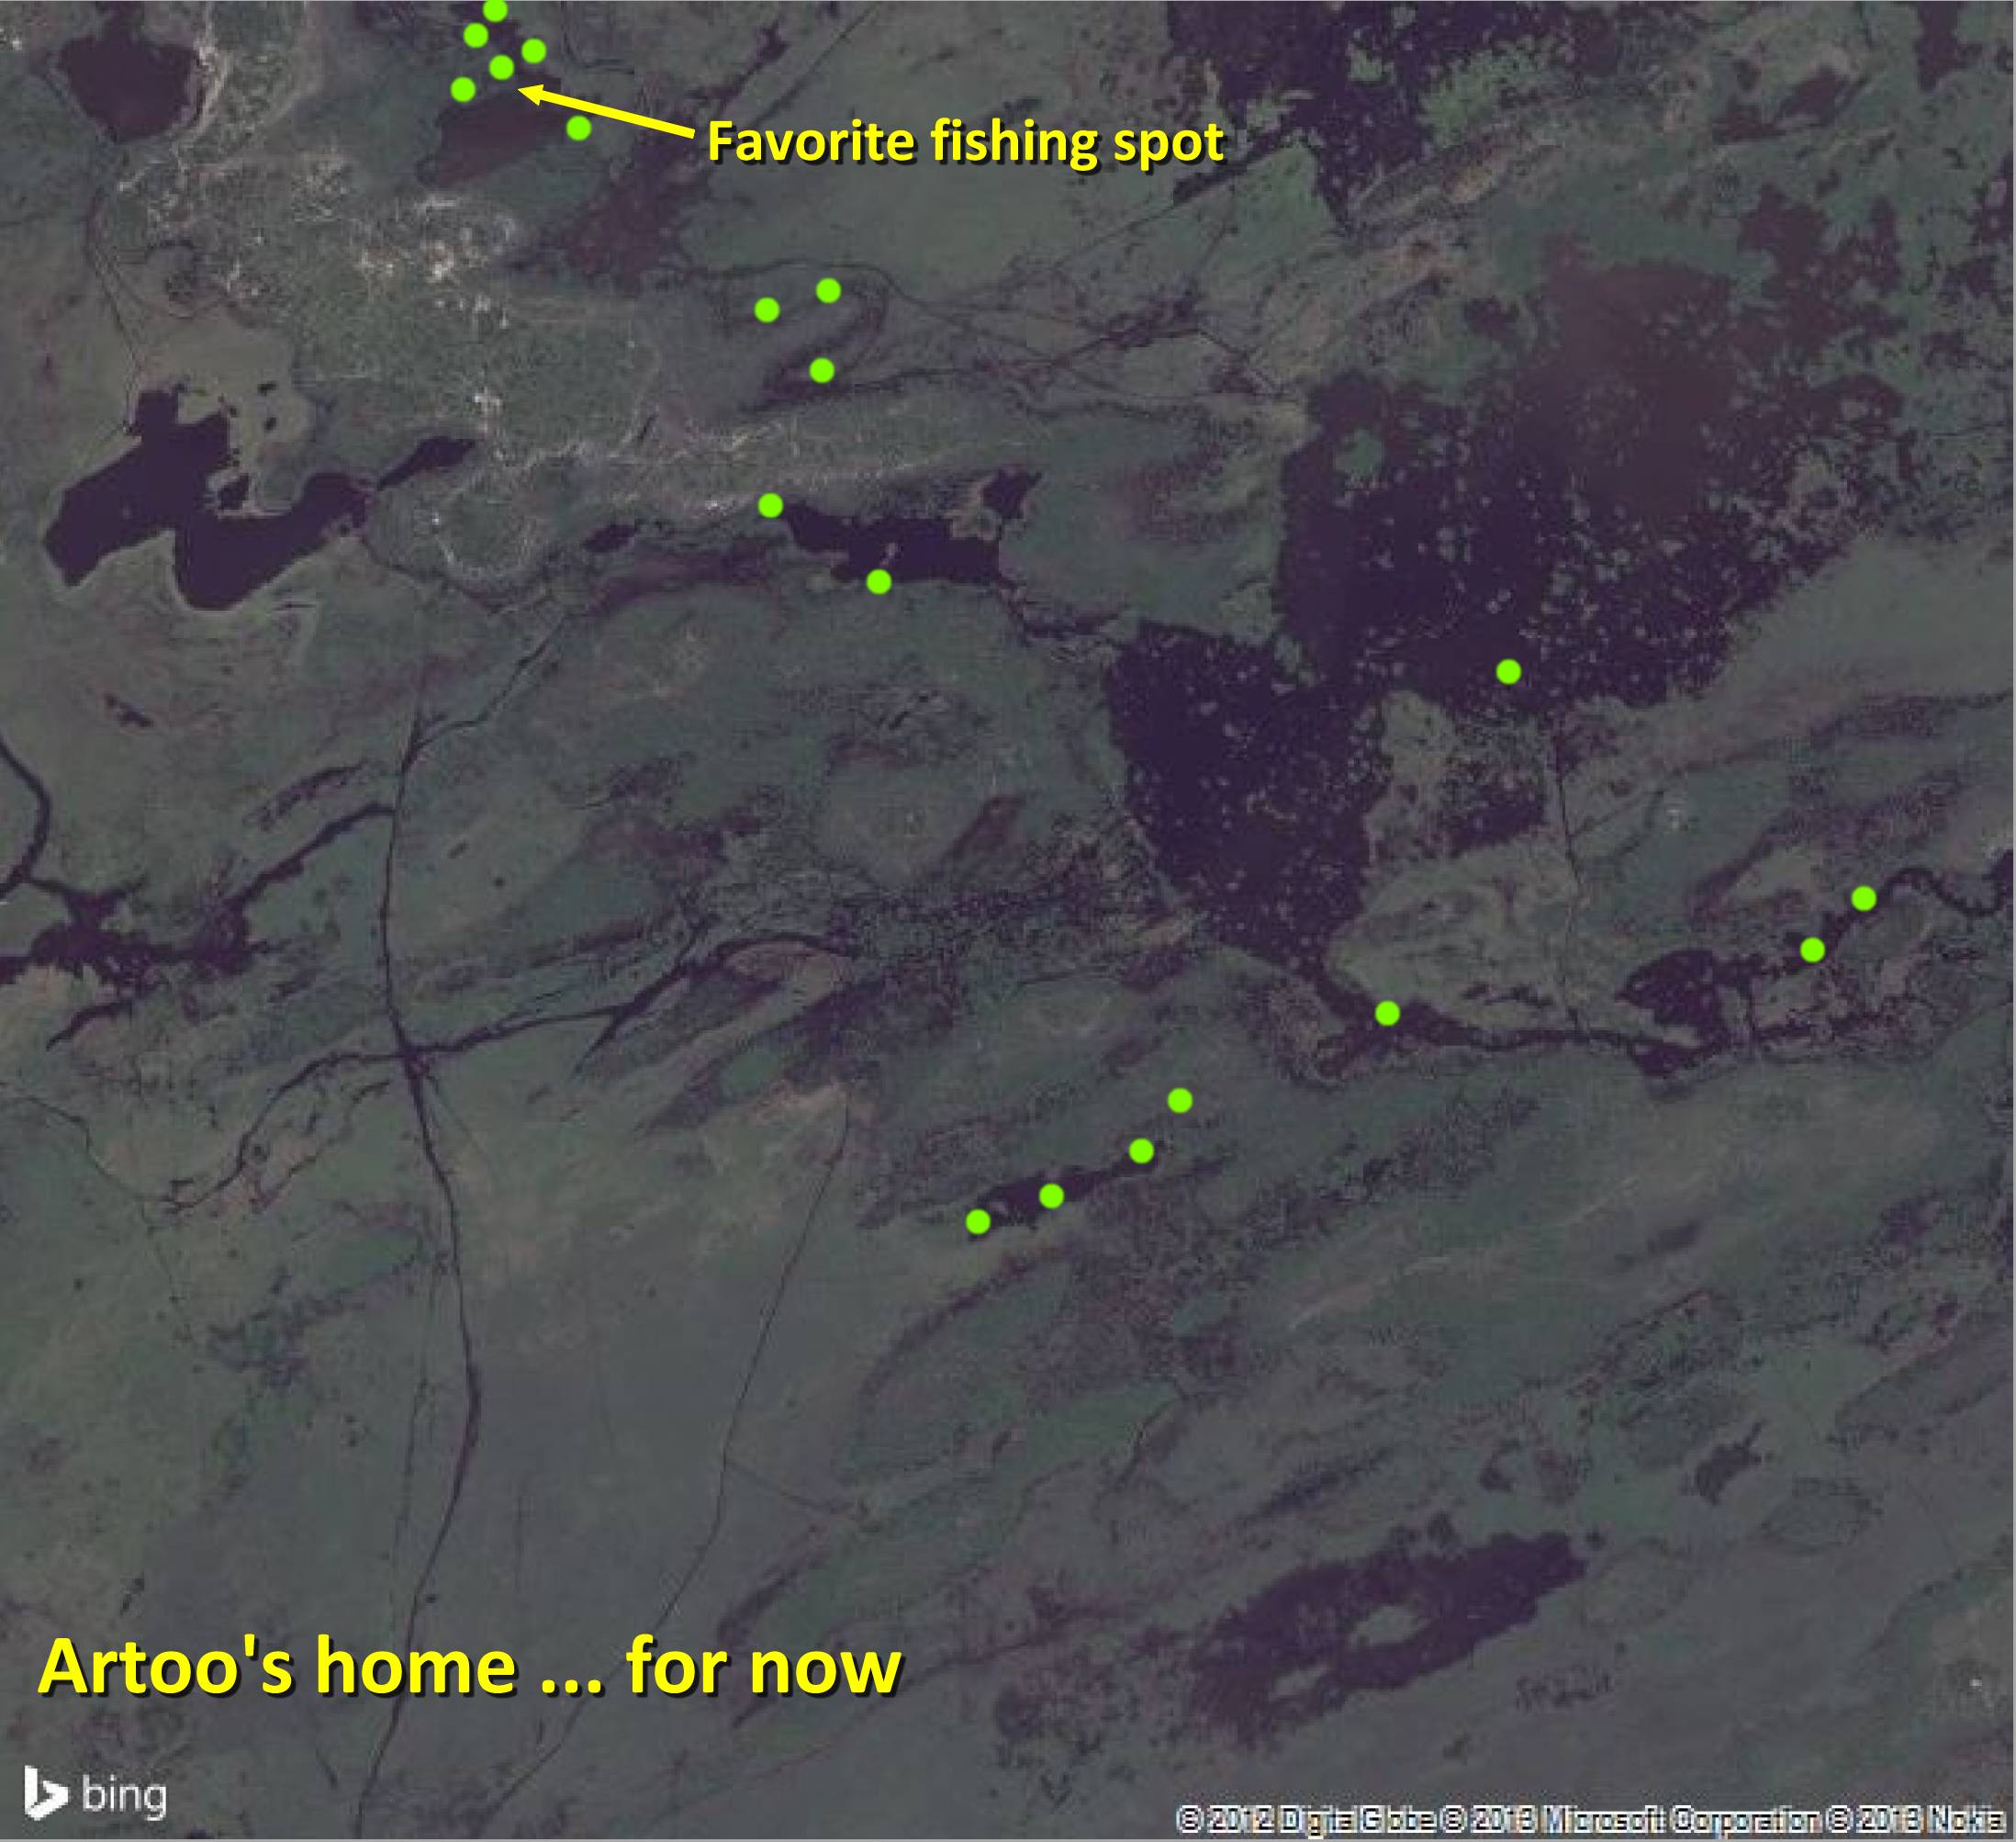 Artoo - November 1, 2013 (Bing Map)